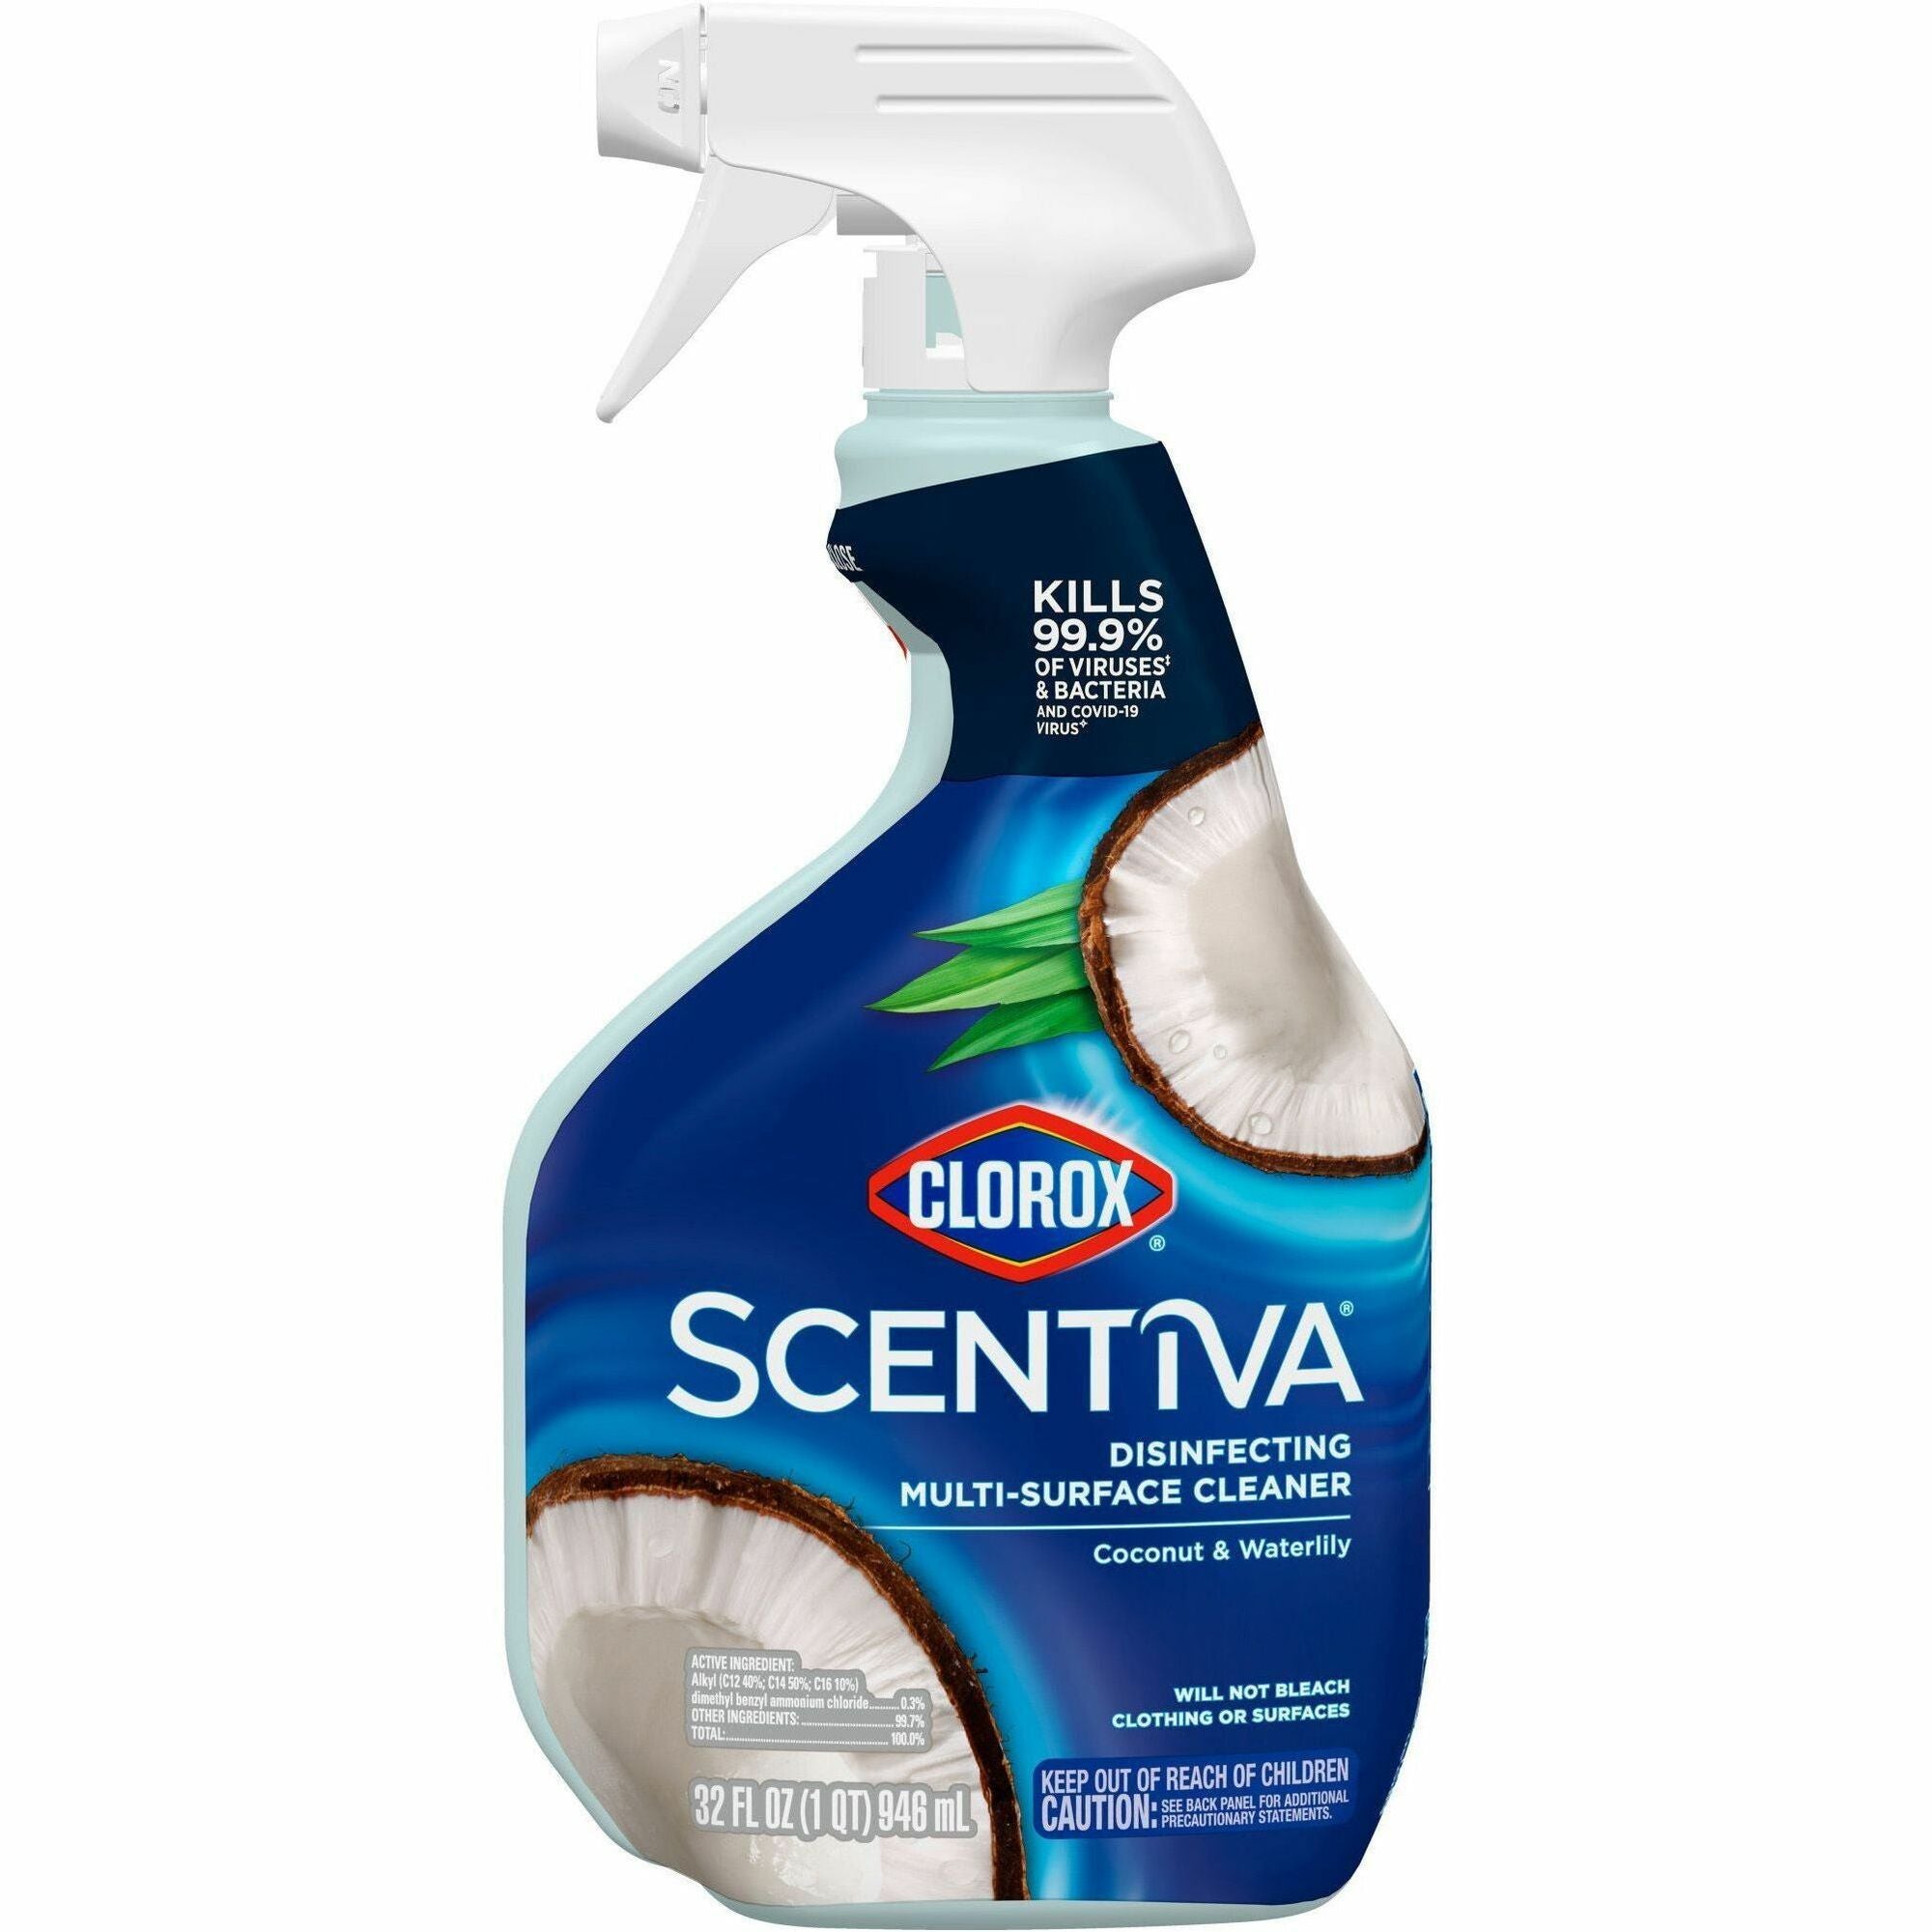 Clorox Scentiva Bleach-free Multi-Surface Cleaner - 32 fl oz (1 quart) - Pacific Breeze & Coconut Scent - 1 Each - Bleach-free, Chemical-free - White - 1